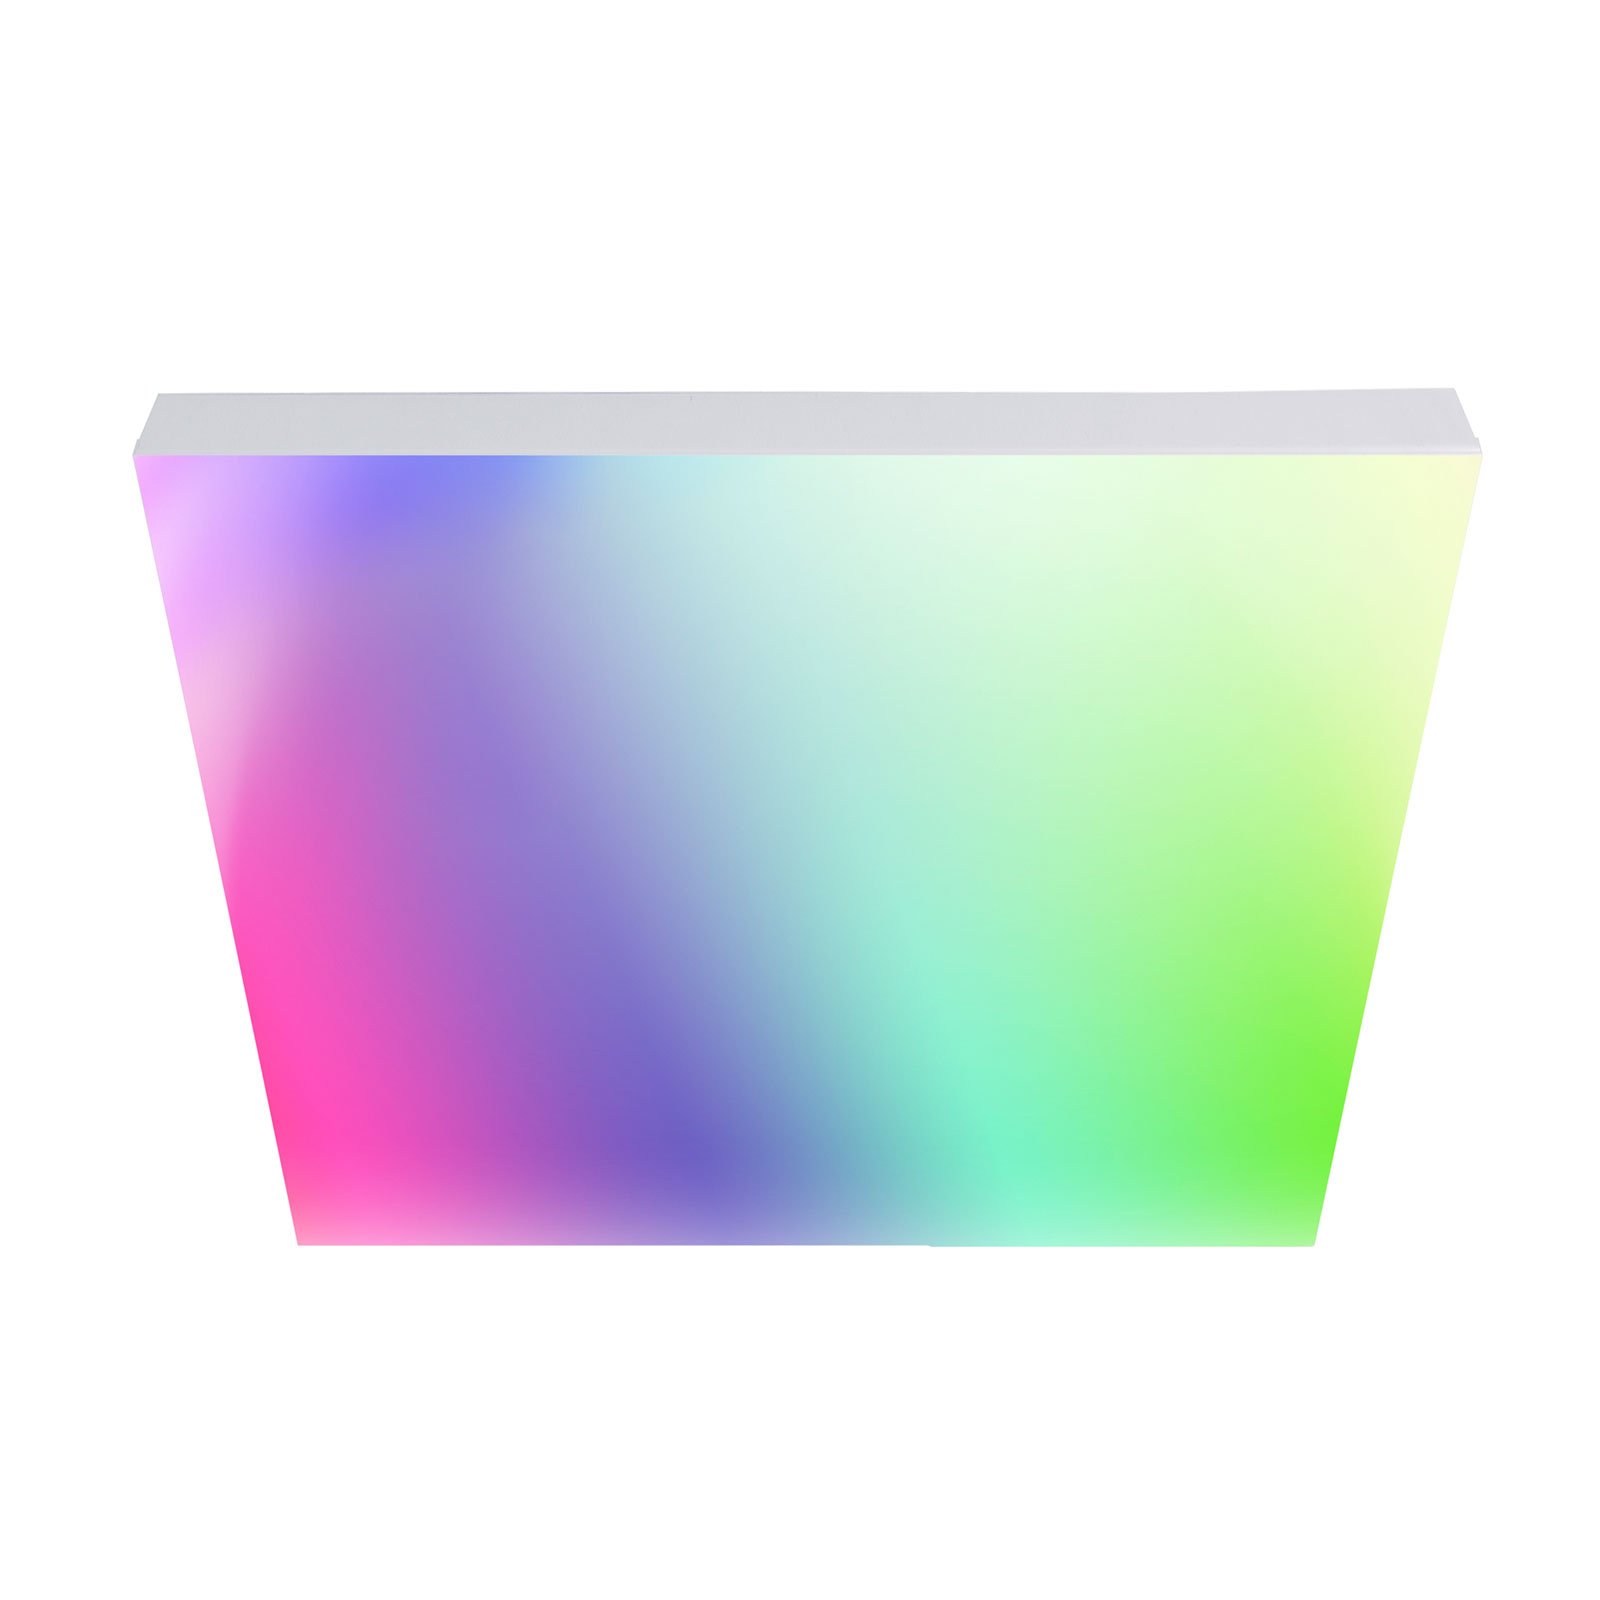 Müller Licht tint LED panel Aris 30 x 30 cm RGBW